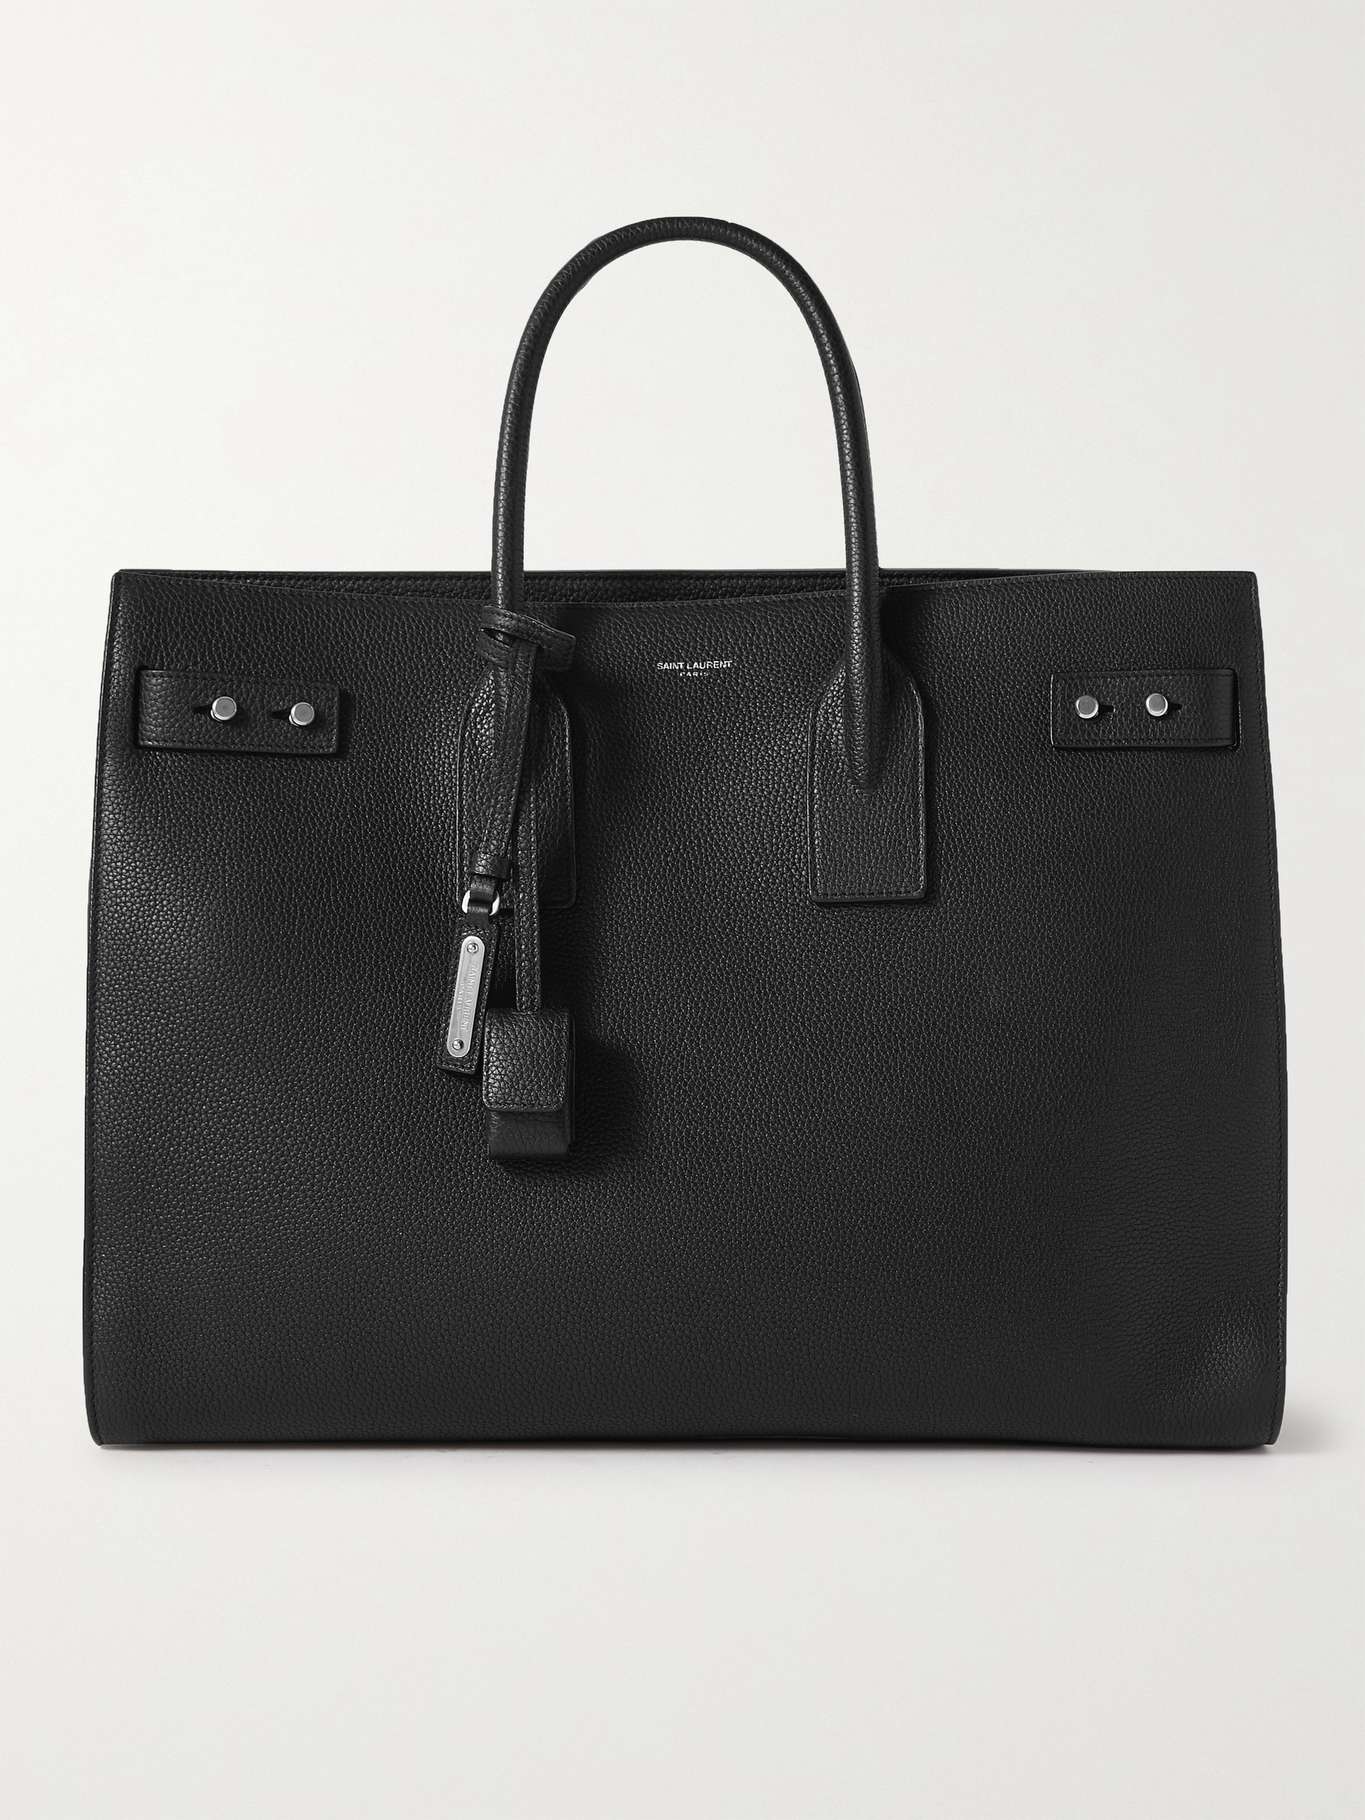 Black Sac de Jour Large Full-Grain Leather Tote Bag | SAINT LAURENT ...